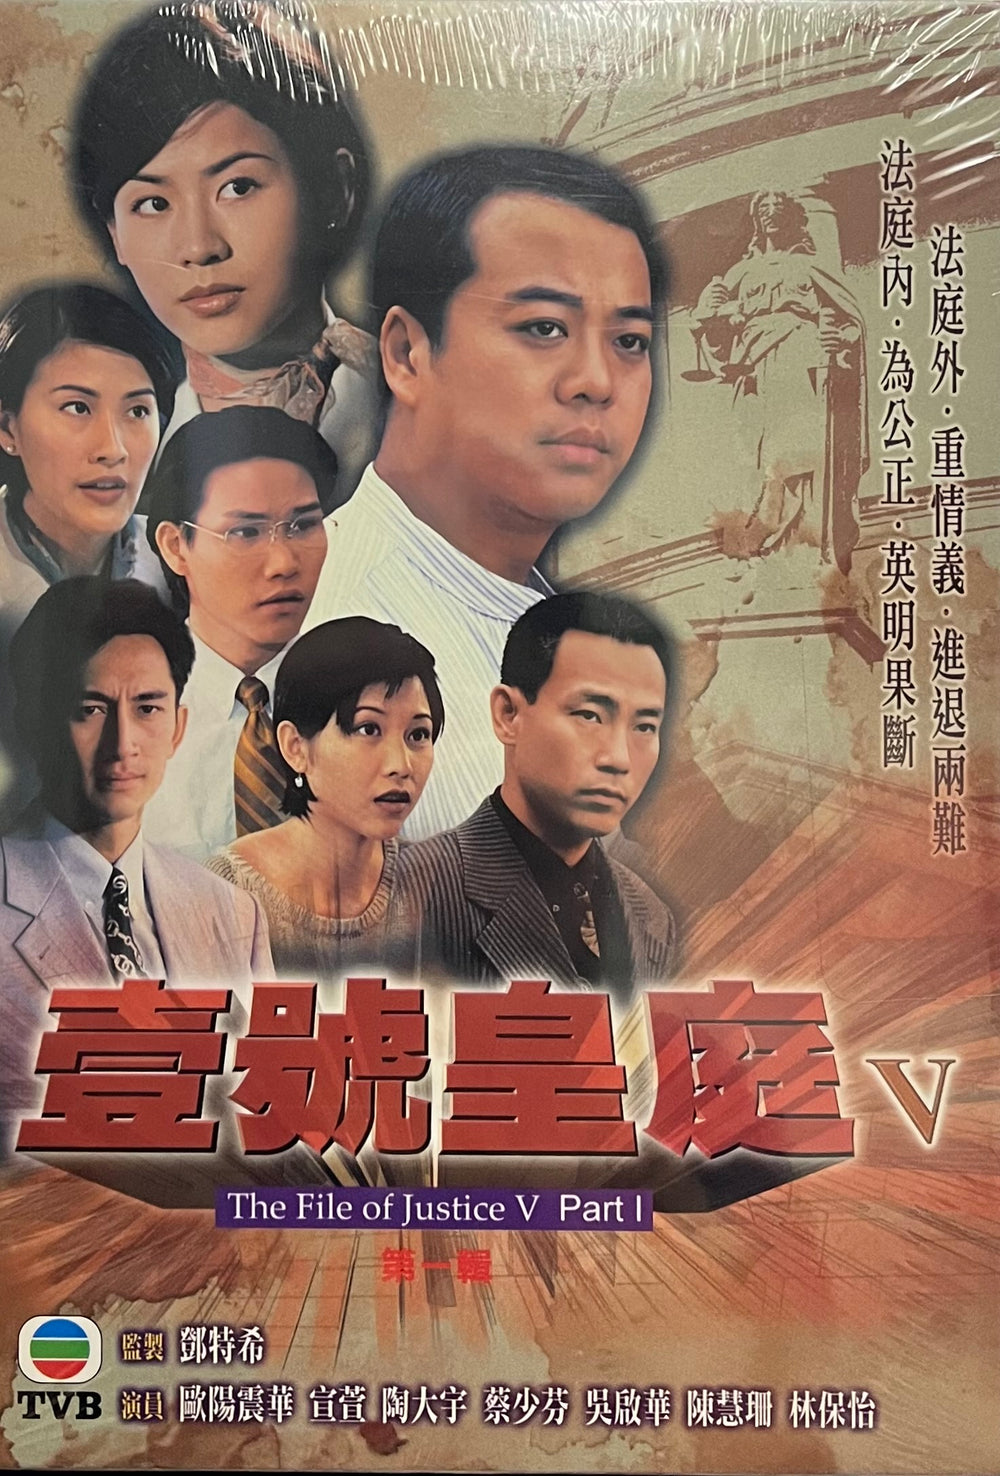 THE FILE OF JUSTICE V PART 1 壹號皇庭 5 1996 TVB (4DVD) NON ENGLISH SUB (REGION FREE)